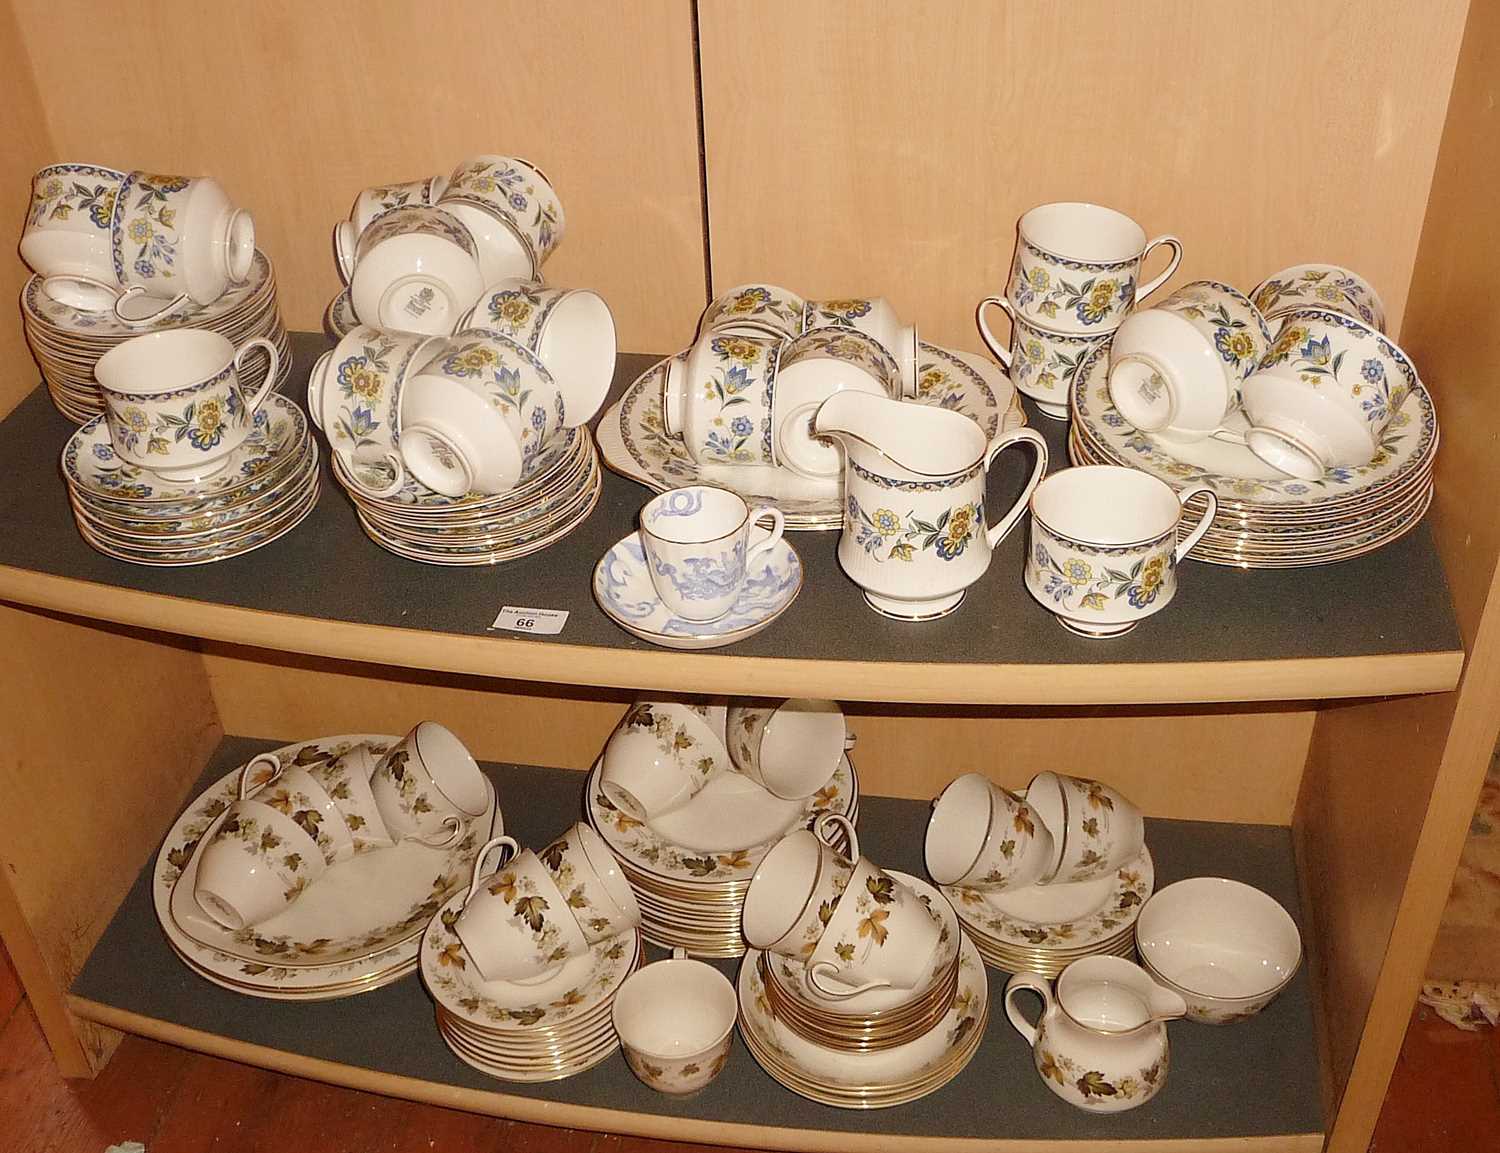 Extensive Paragon "Contessa" tea set and a similar Royal Doulton "Larchmont" tea set (two shelves)